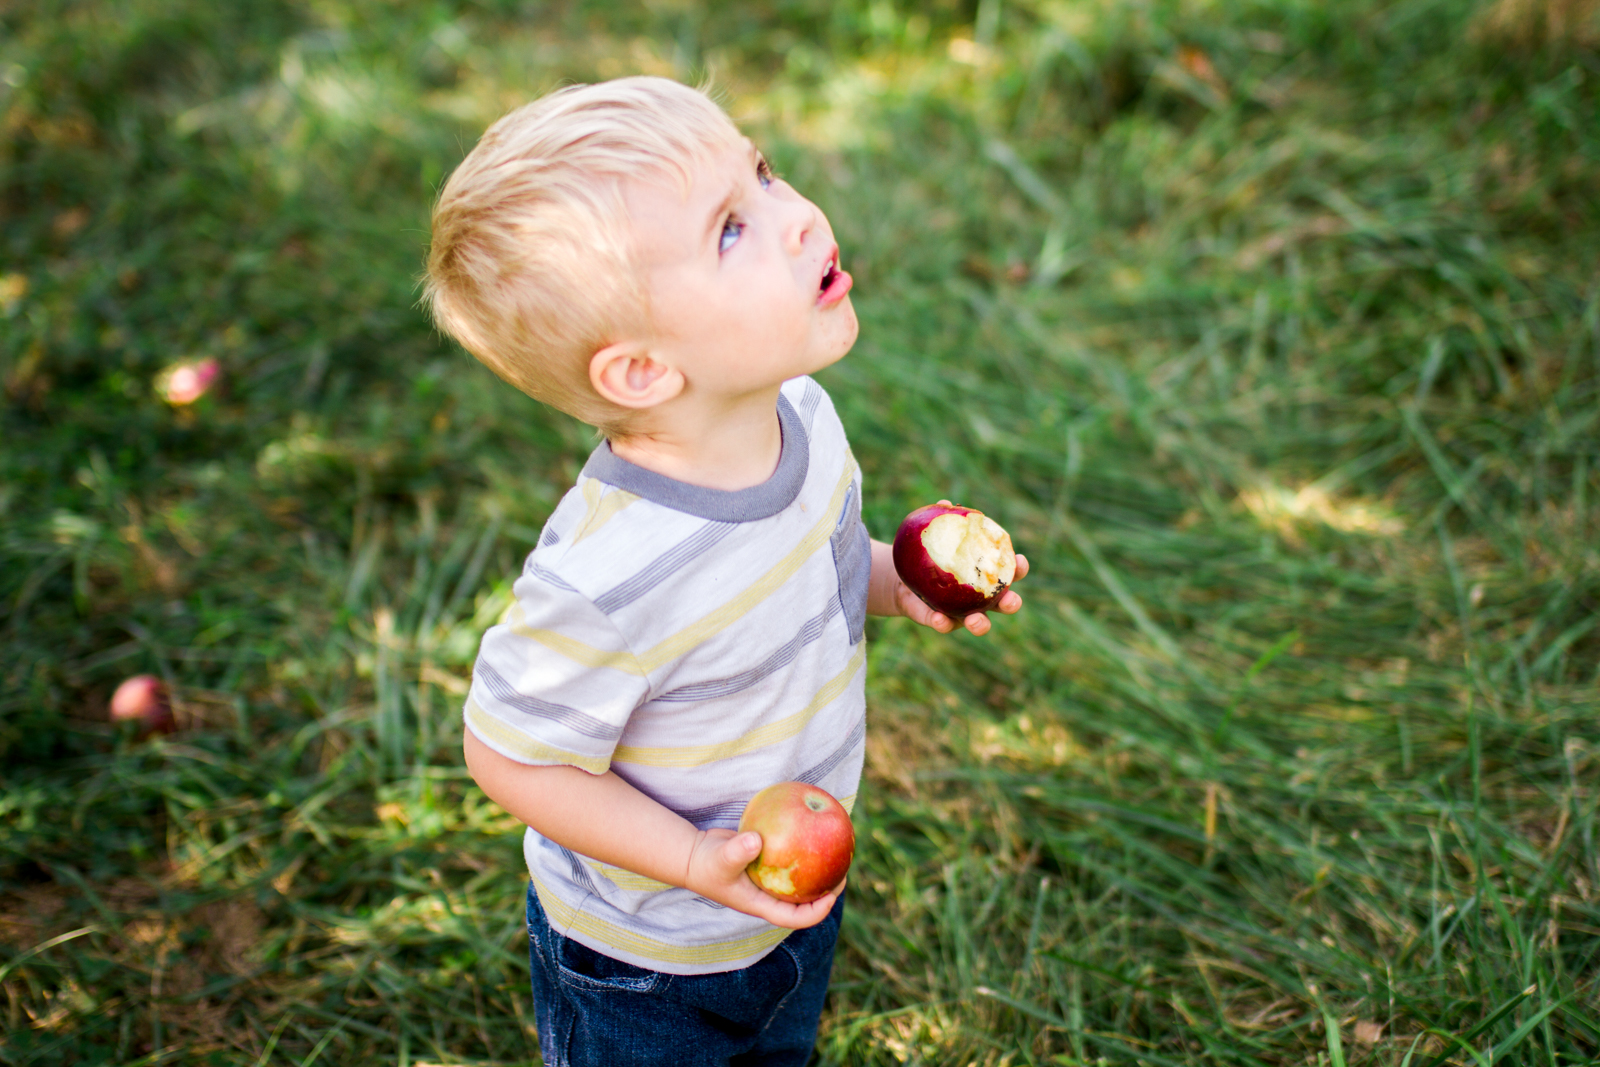  Rebecca Clair Photography, Kansas City lifestyle photographer, apple picking photo session, apple orchard photos, Kansas City family photographer, boy holding apples 